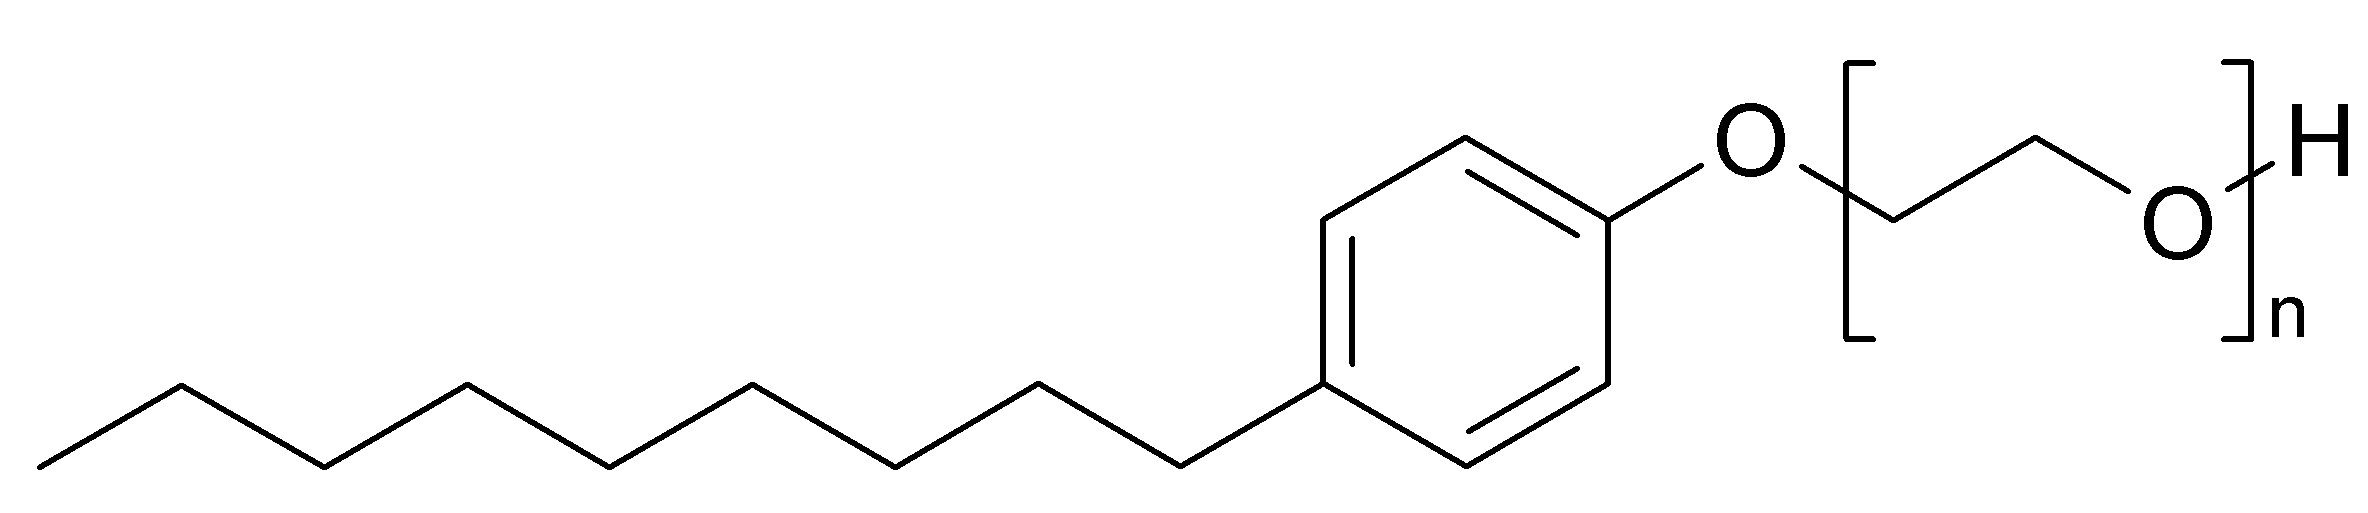 Nonyl Phenol Ethoxilate